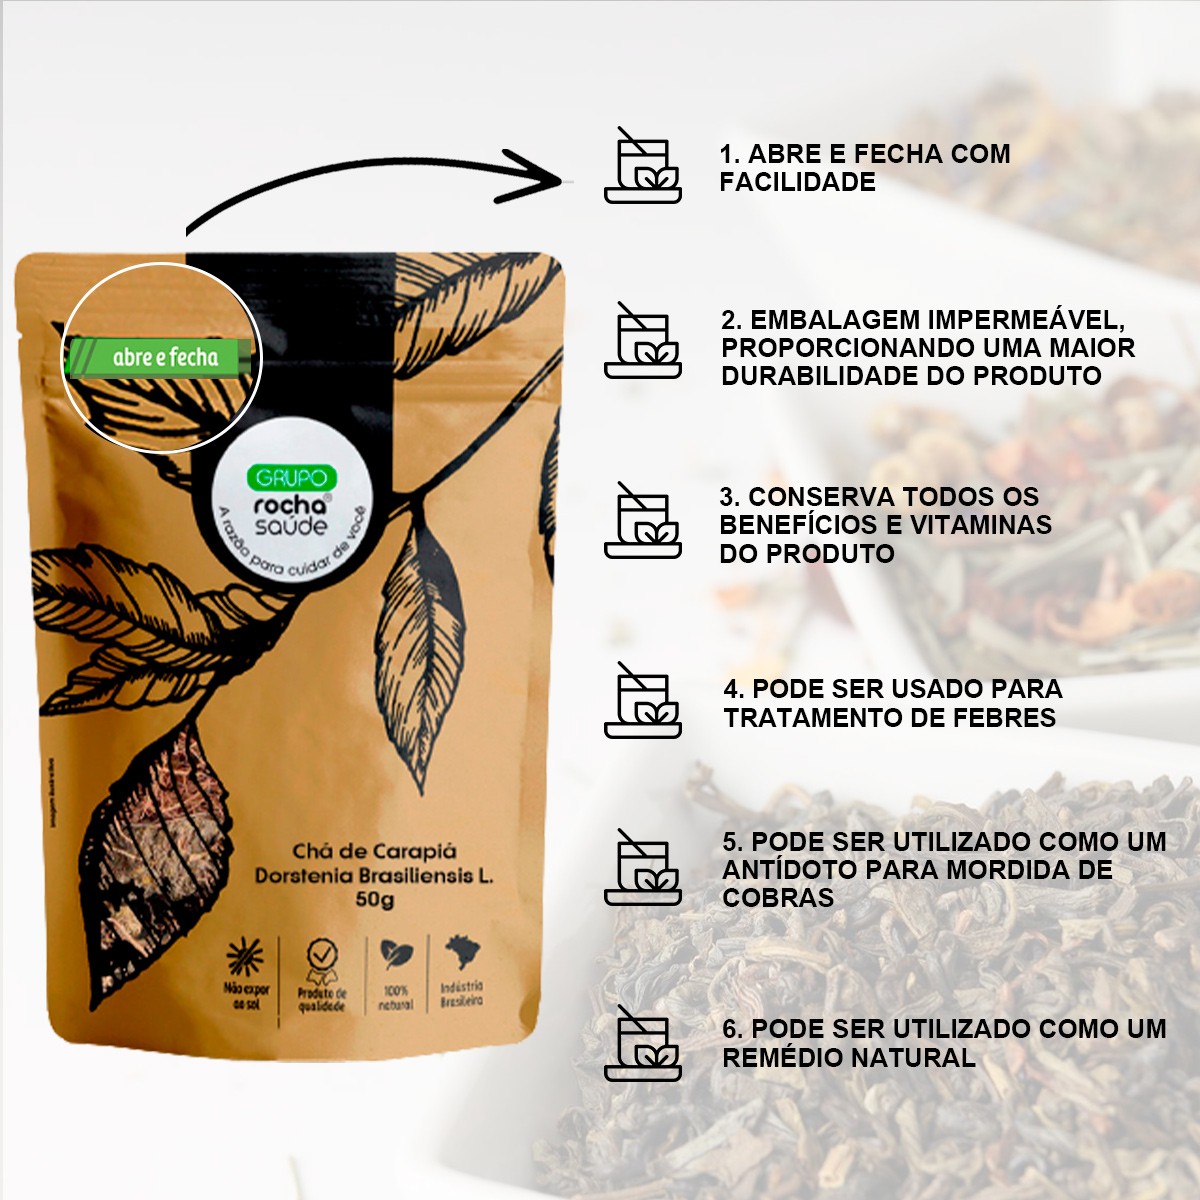 Chá de Carapiá - Dorstenia Brasiliensis L. - 50g